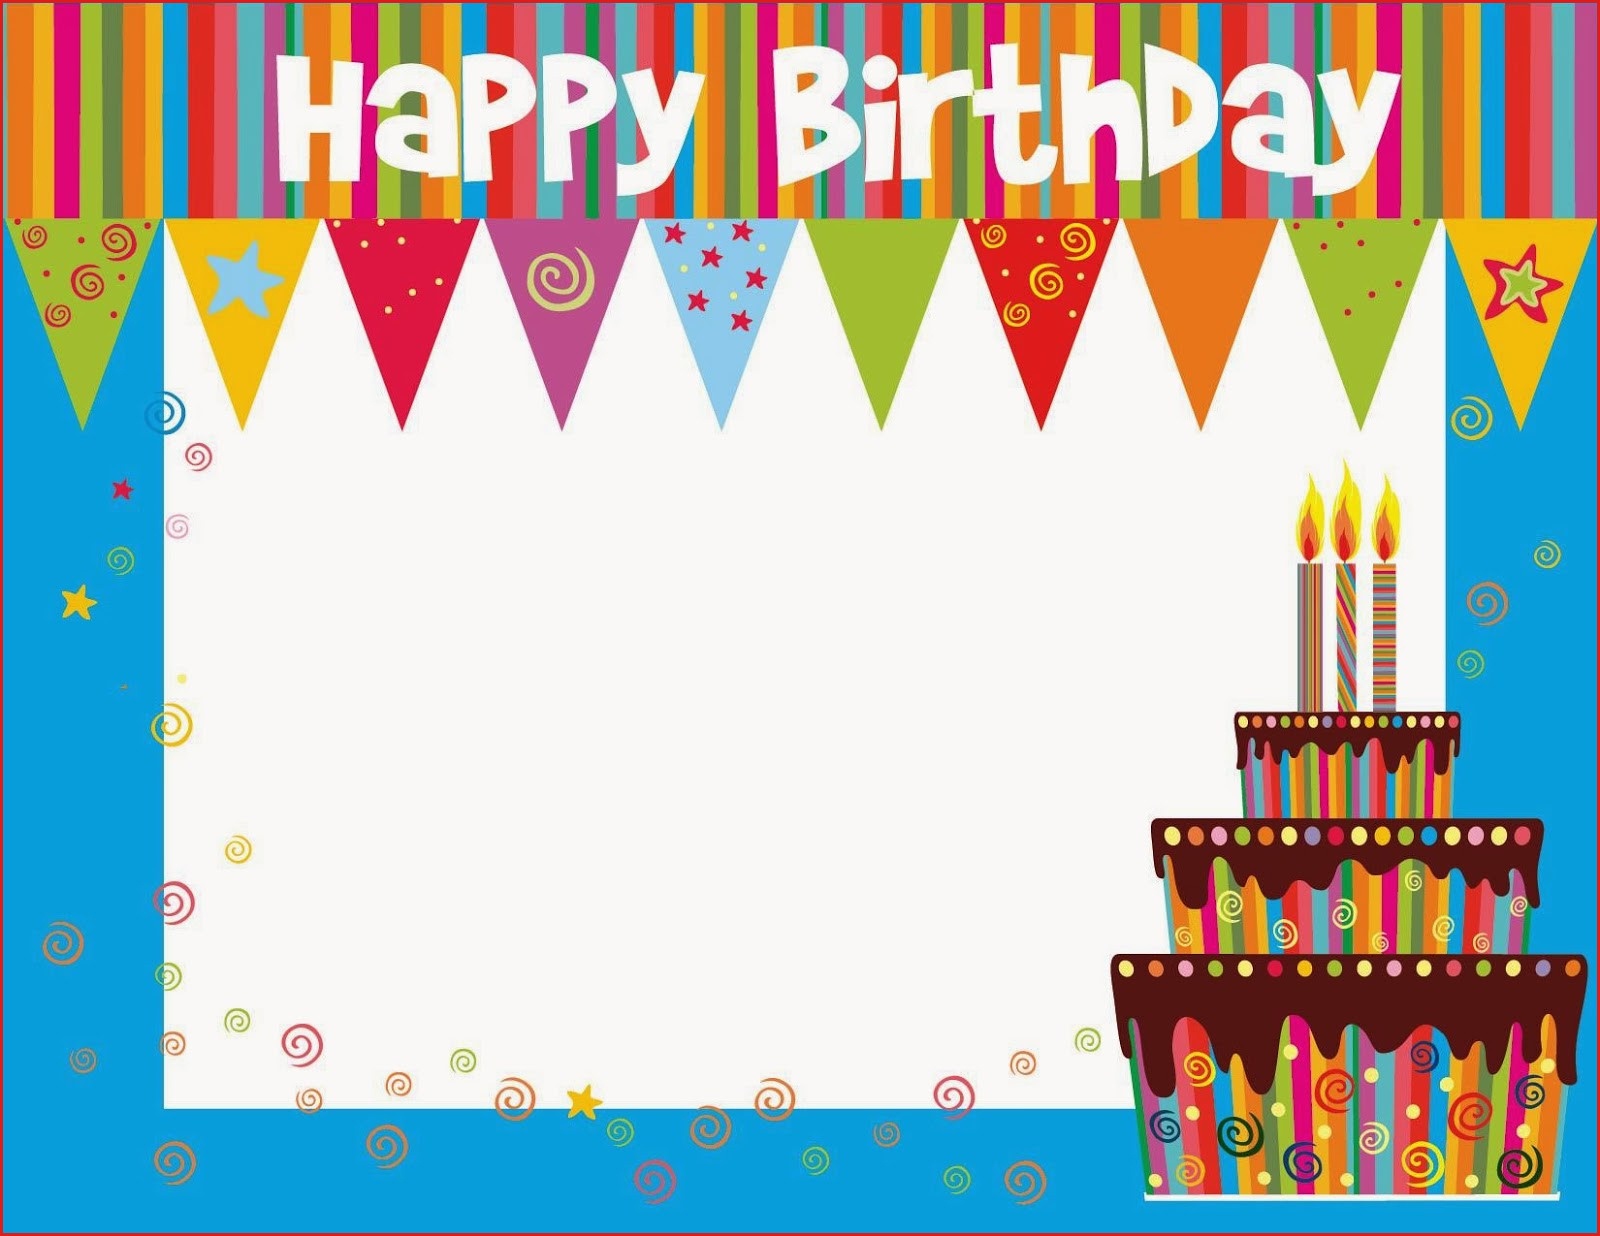 Create Birthday Cards Online Free Printable Birthday Cards Ideas - Create Greeting Cards Online Free Printable